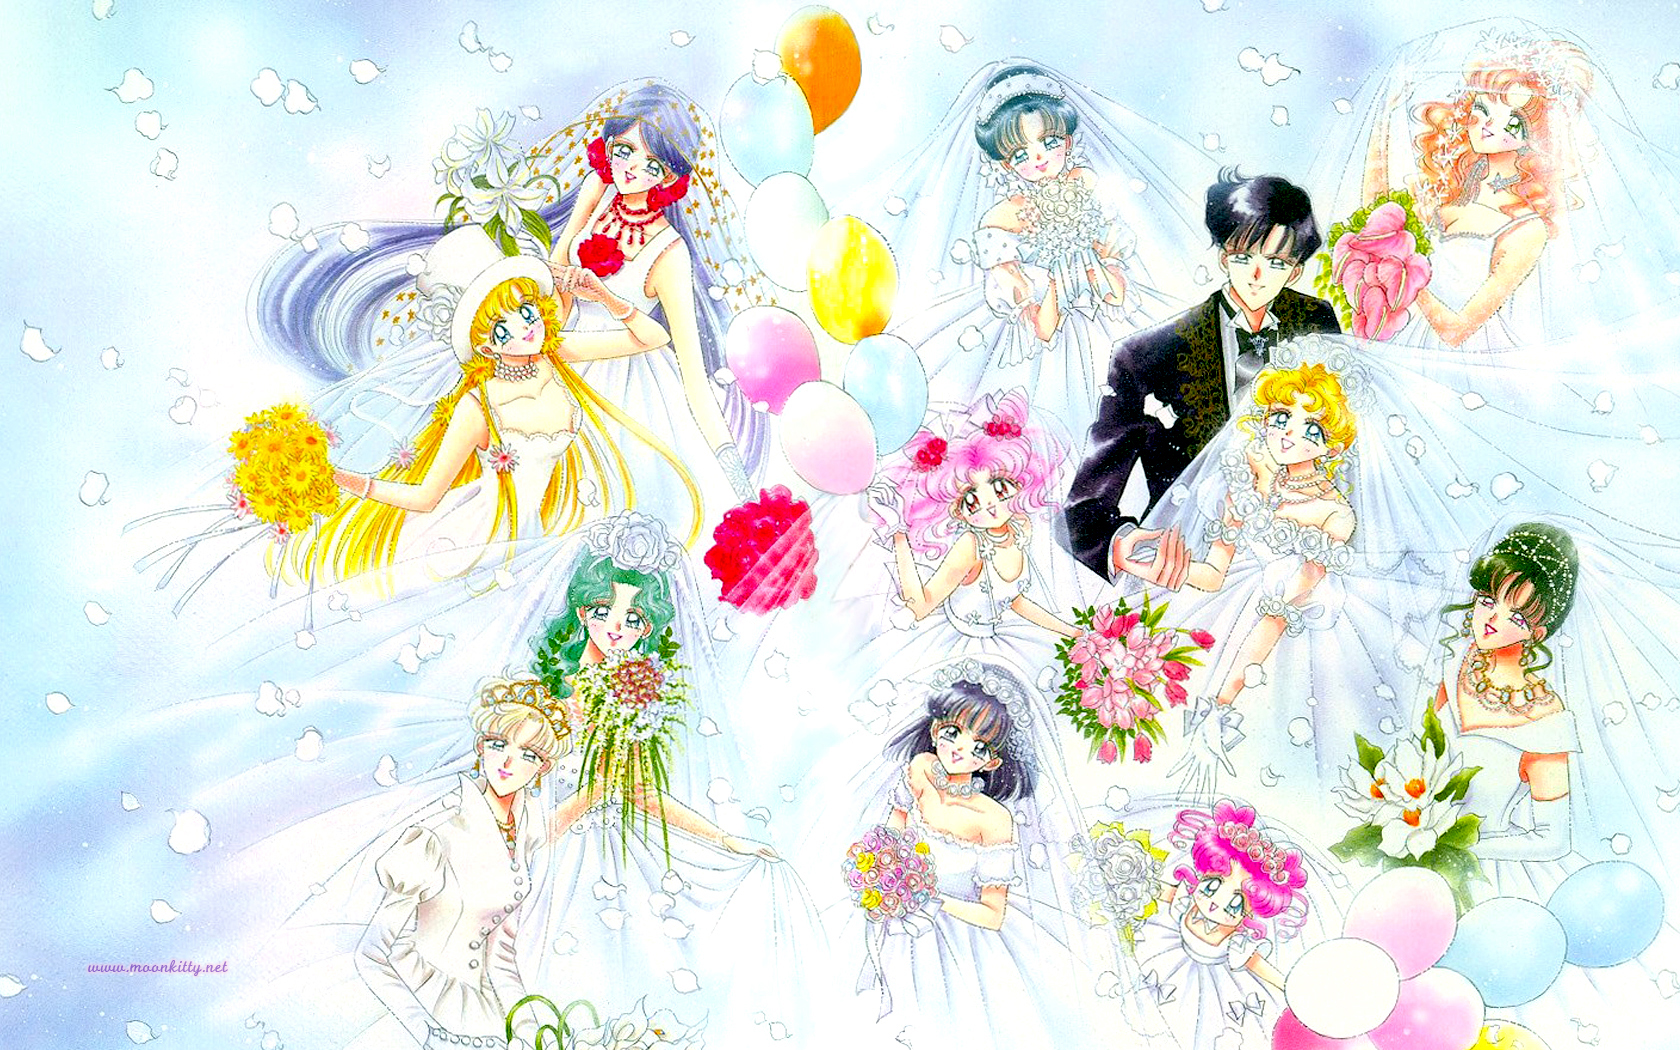 Moonkitty.net Sailor Moon Wallpapers Widescreen